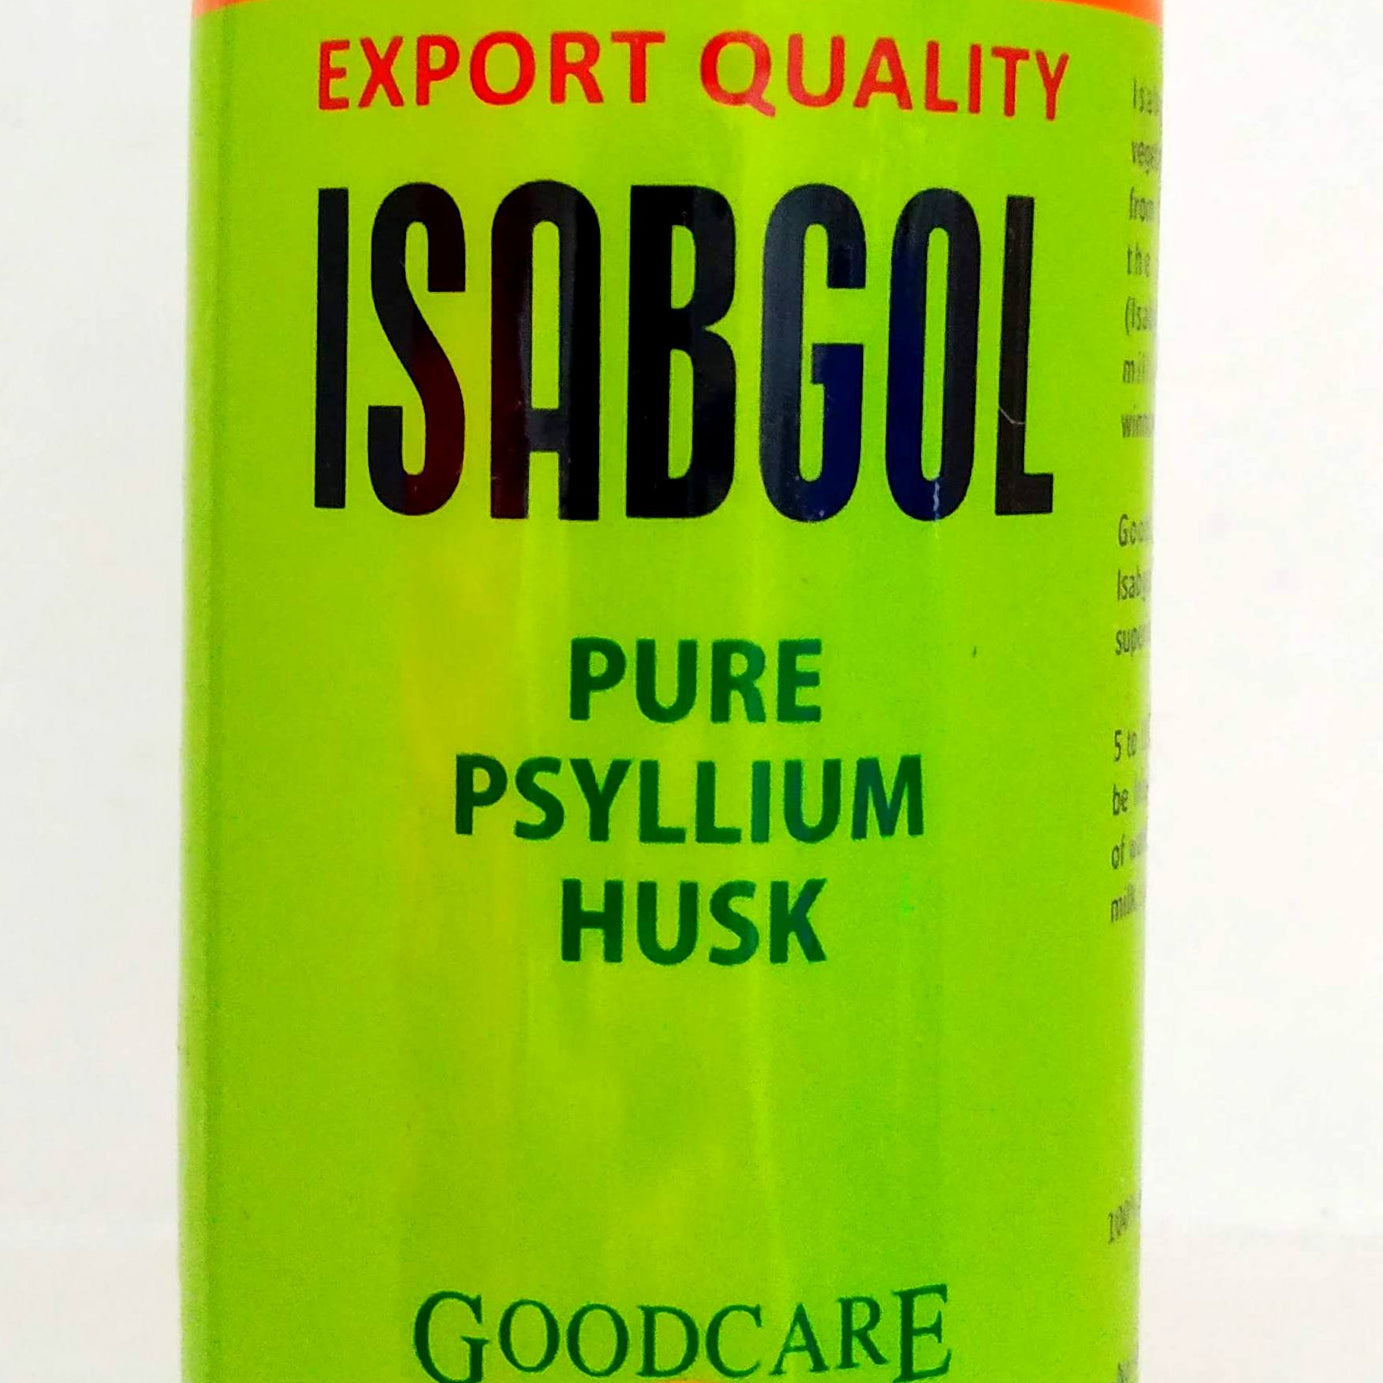 Shop Isabgol - Psyllum husk 100gm at price 115.00 from Baidyanath Online - Ayush Care